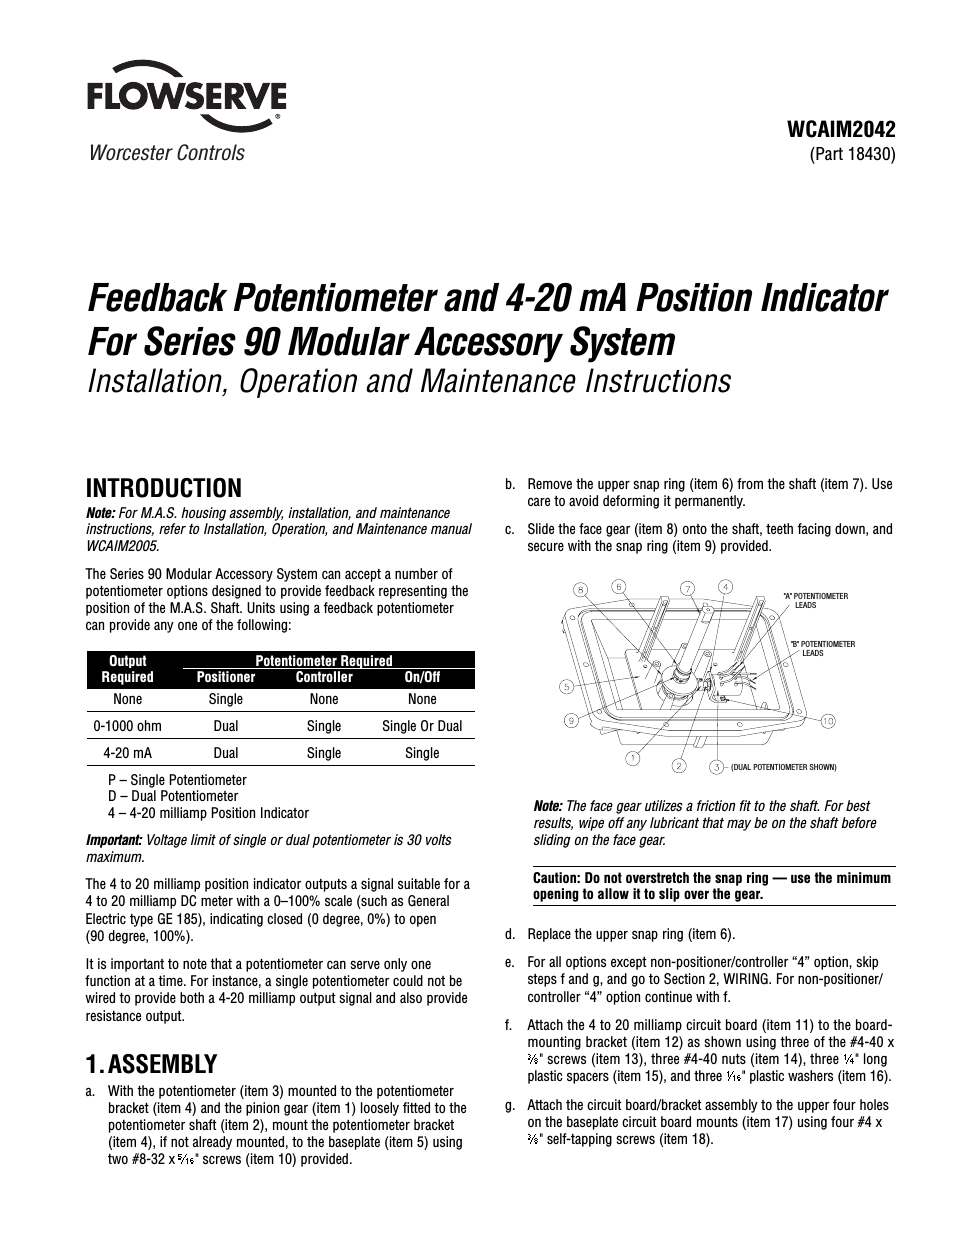 90 Series Feedback Potentiometer